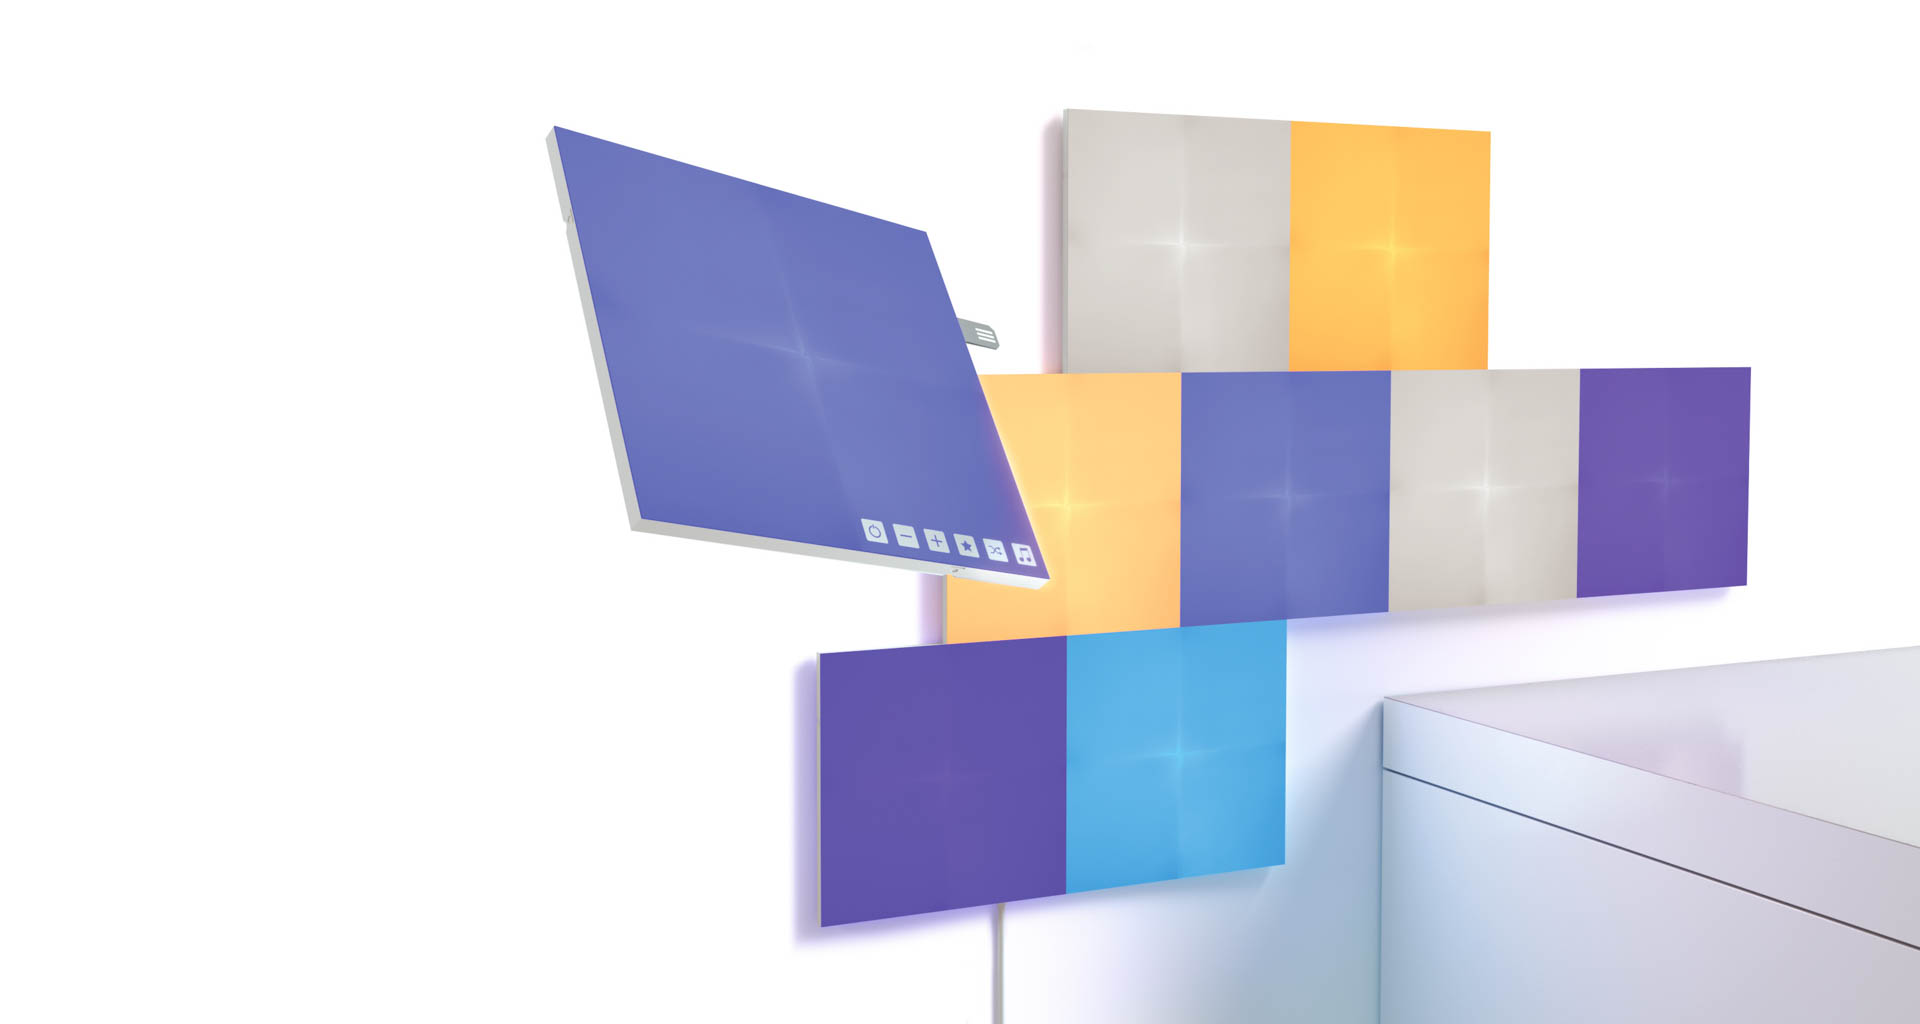 Nanoleaf Canvas light squares snap together and can colors can be set individually. Image: Nanoleaf.